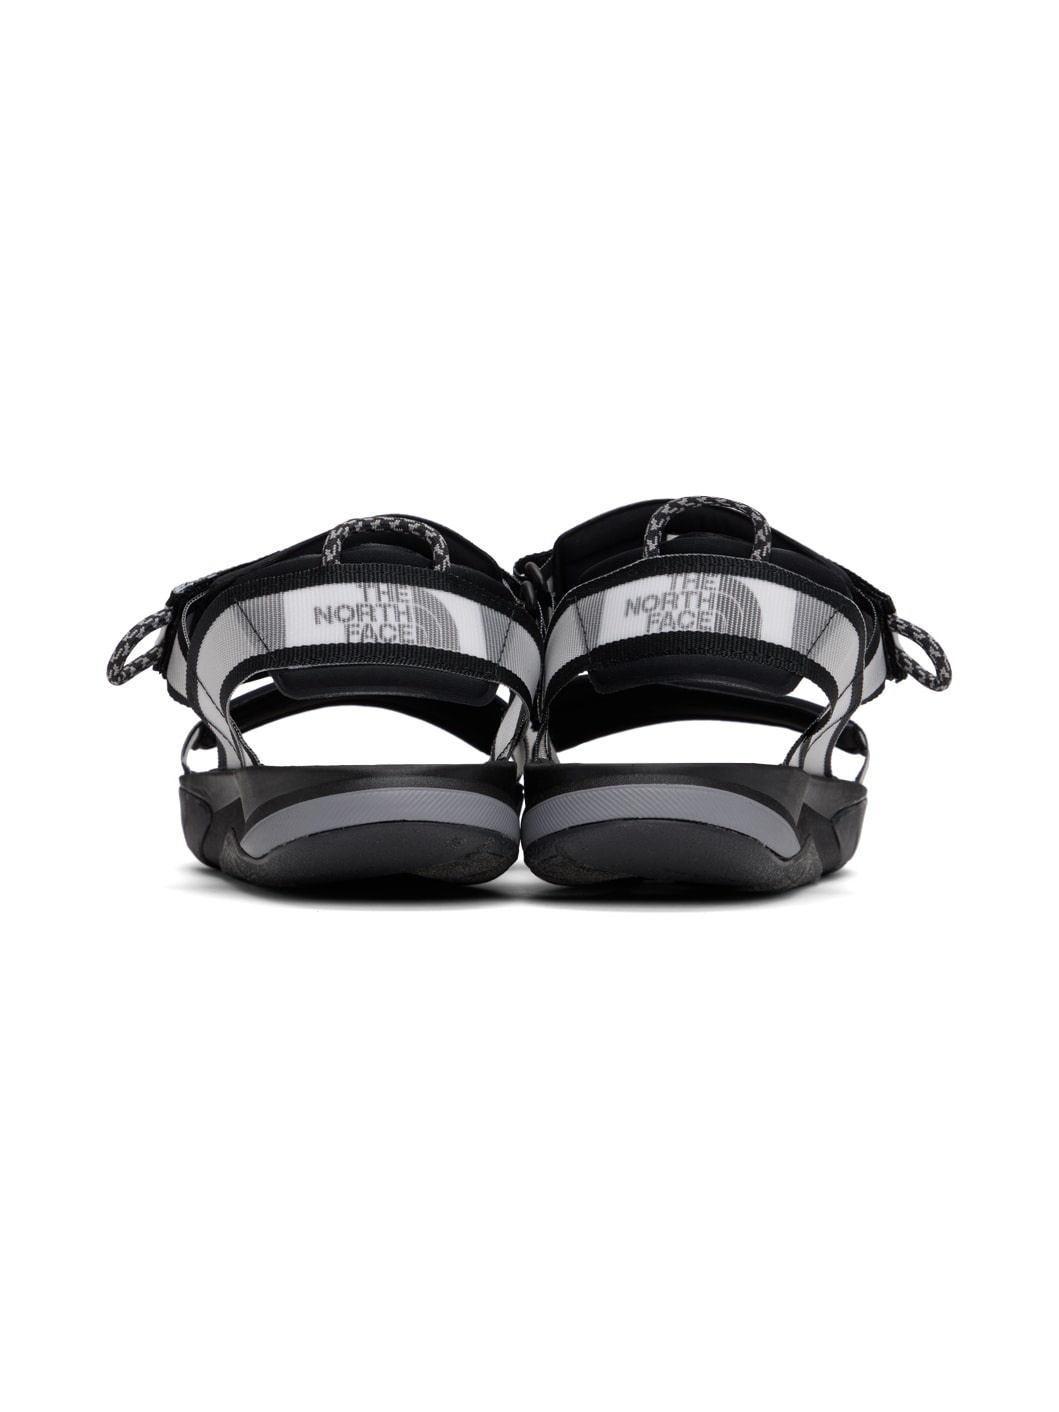 Gray & Black Skeena Sandals - 2